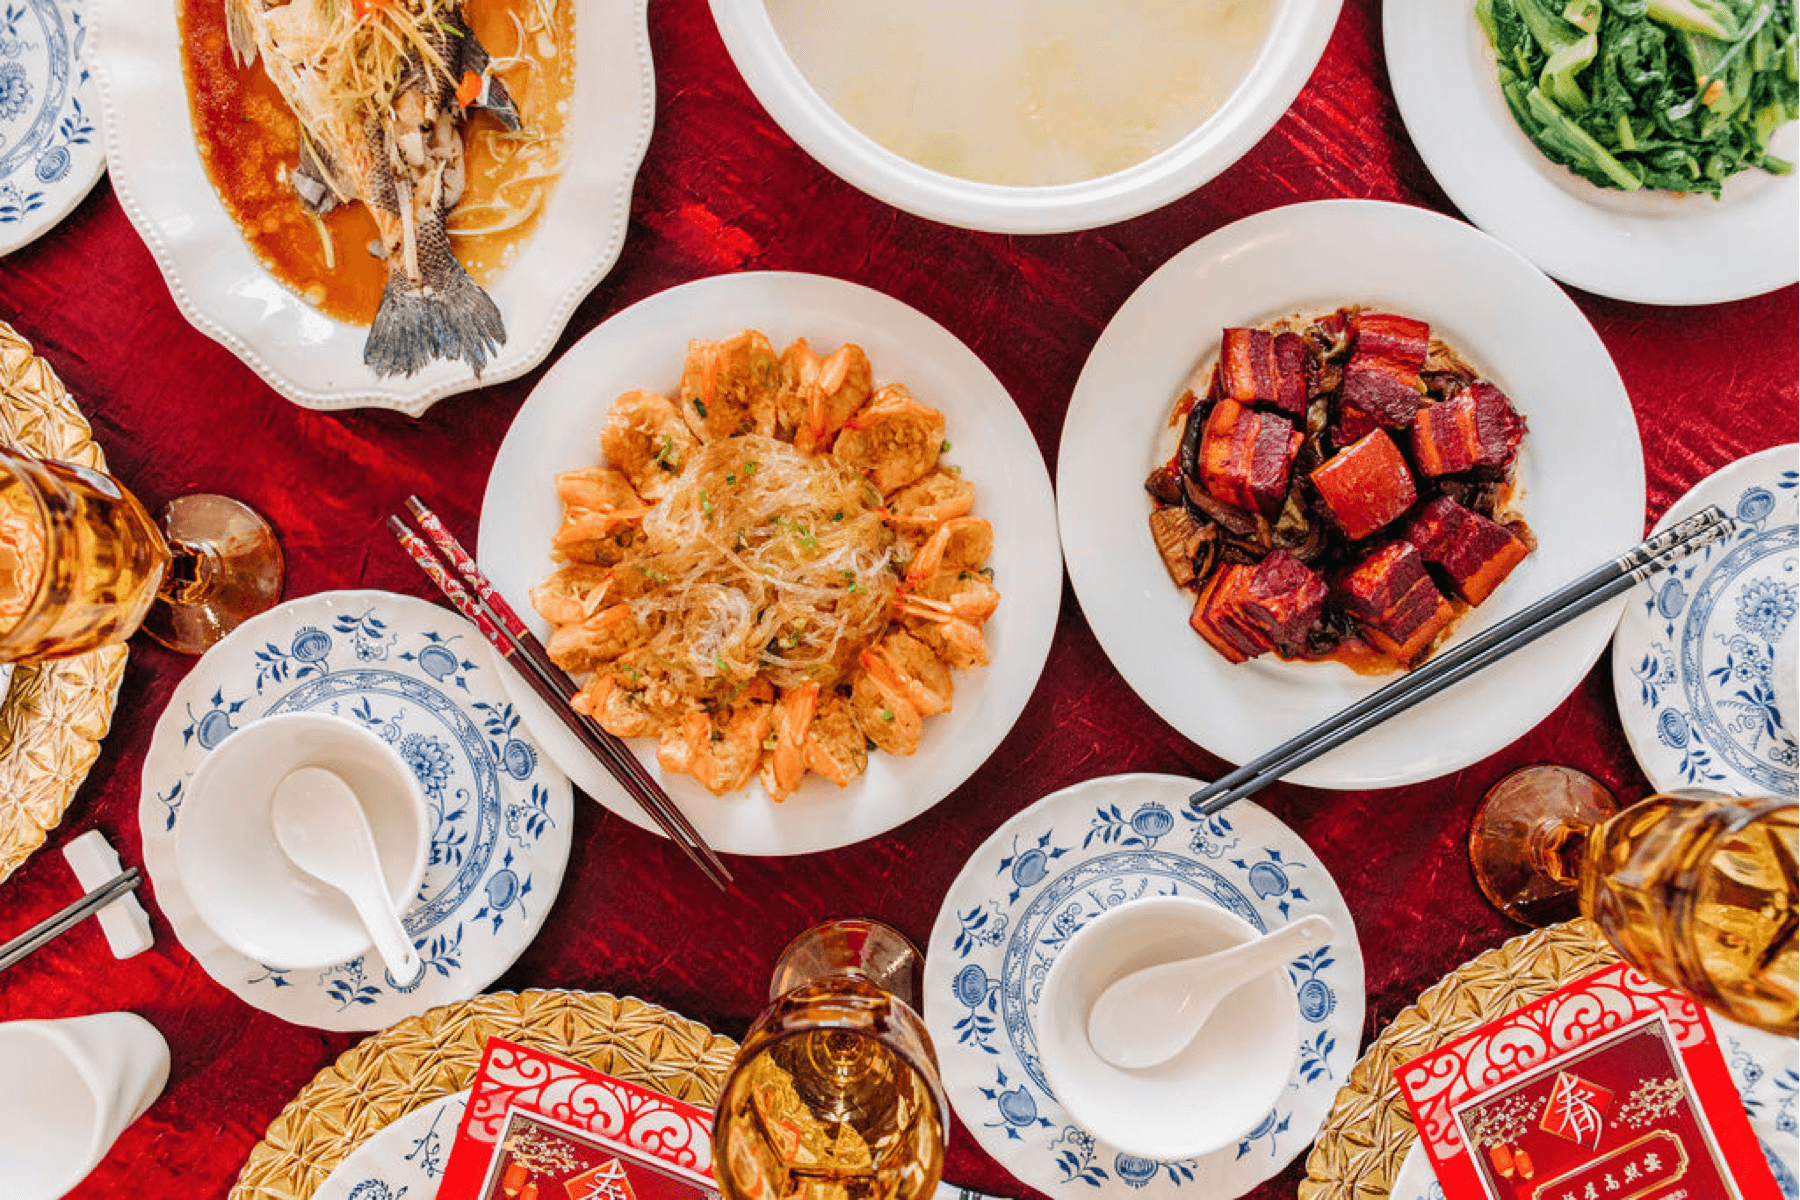 An overhead view of a Lunar New Year feast.